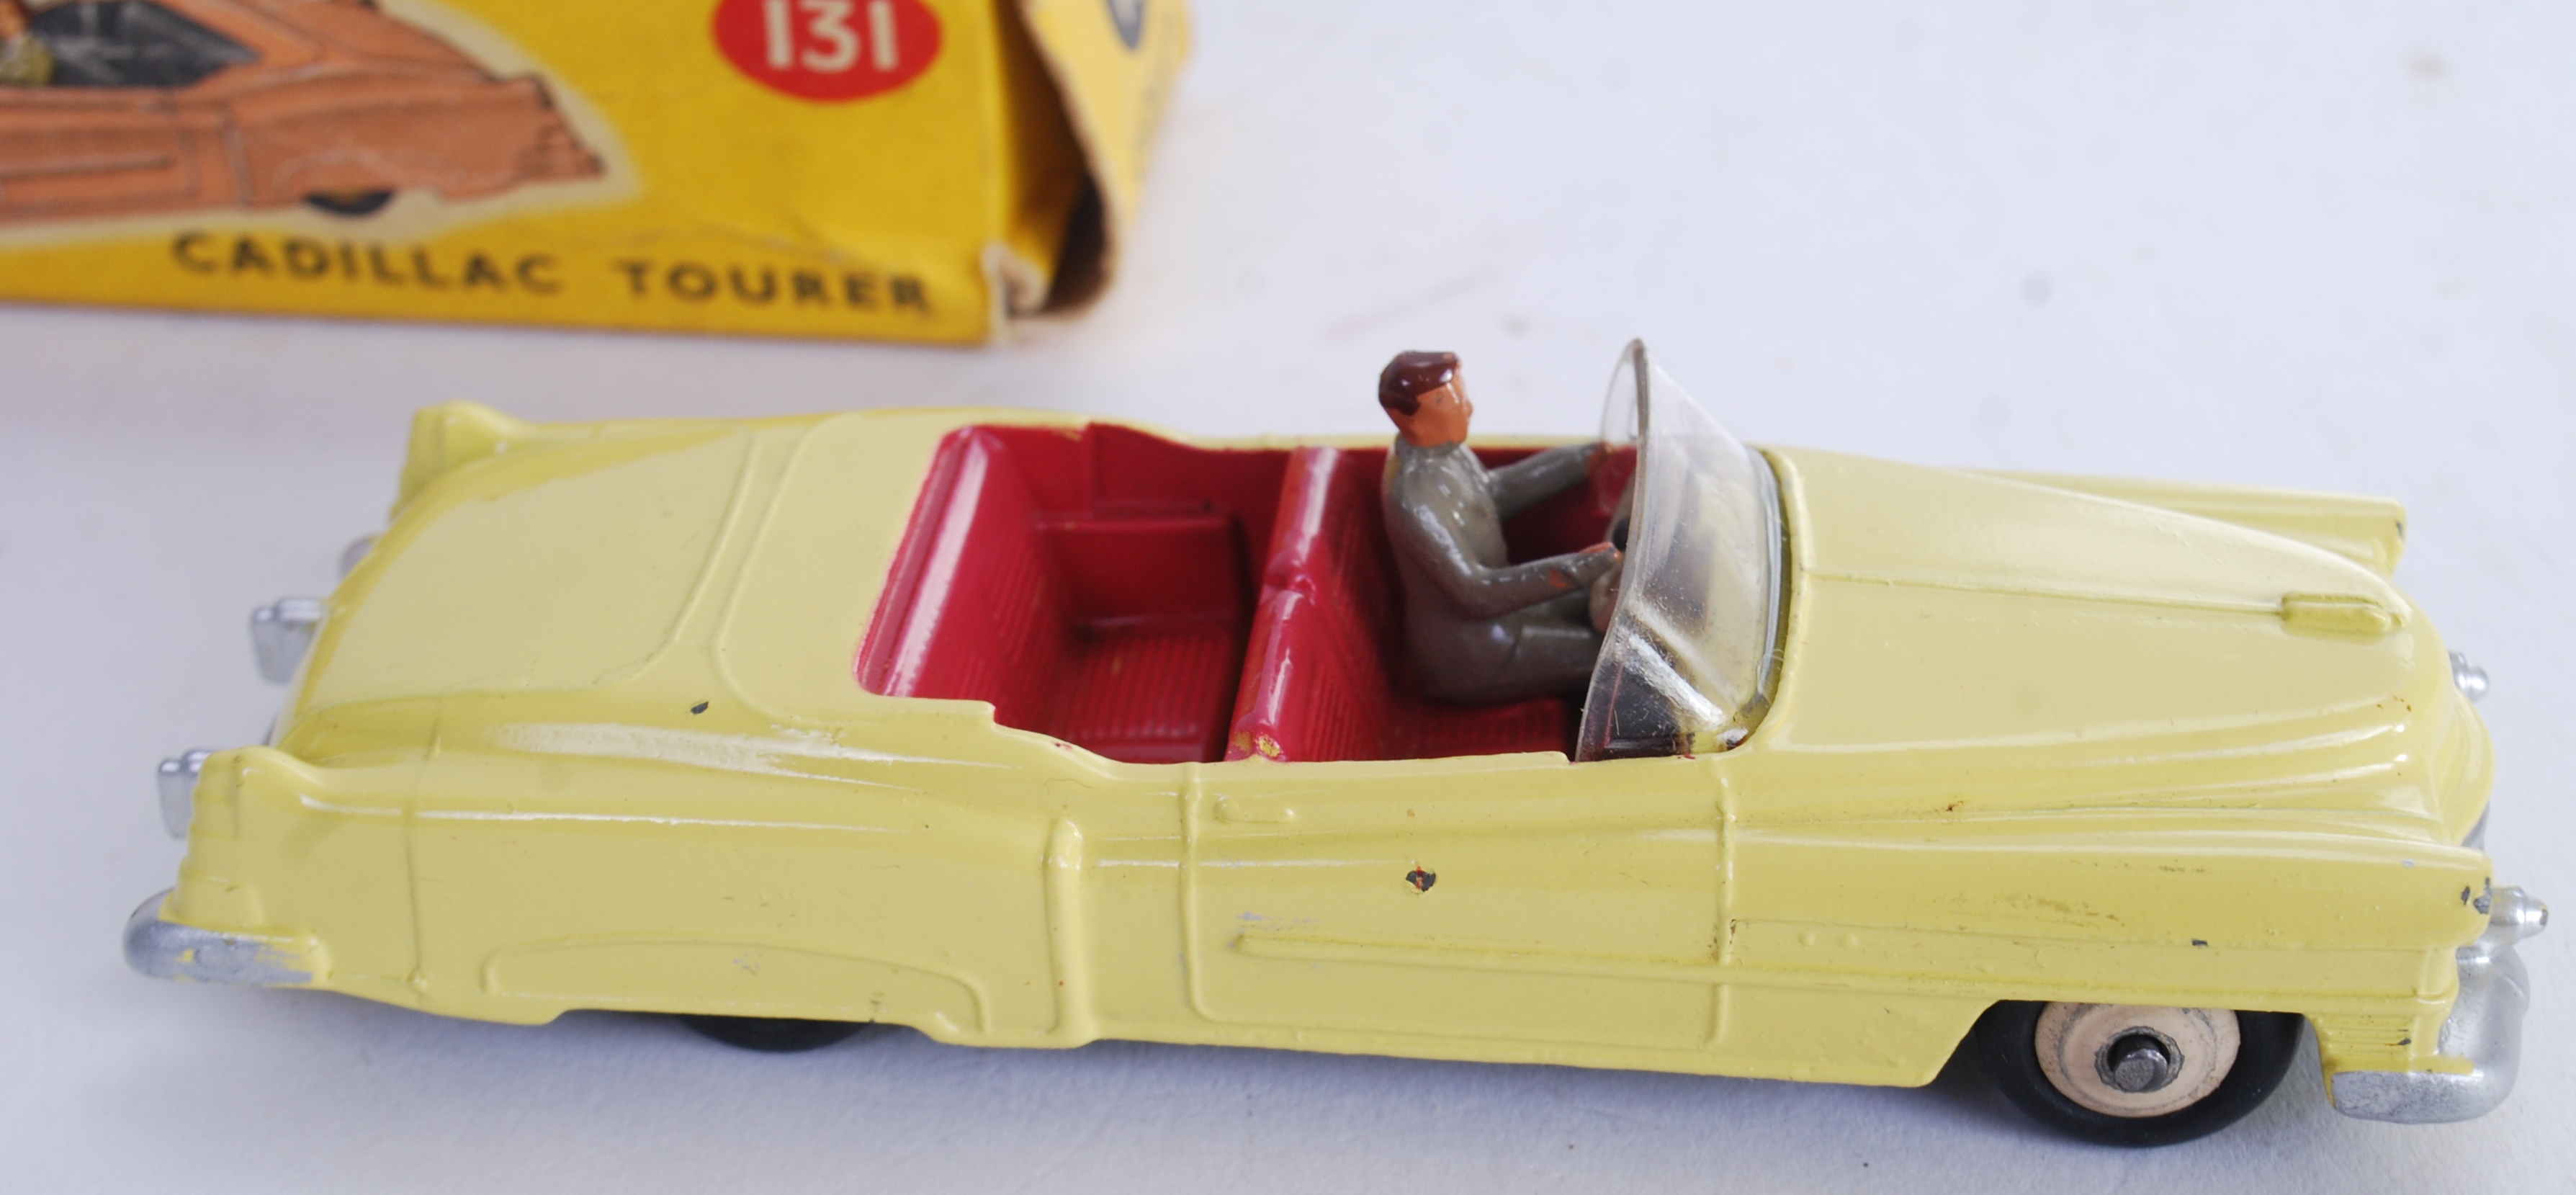 DINKY: An original vintage Dinky Toys 131 Cadillac Tourer diecast model car. - Image 3 of 5